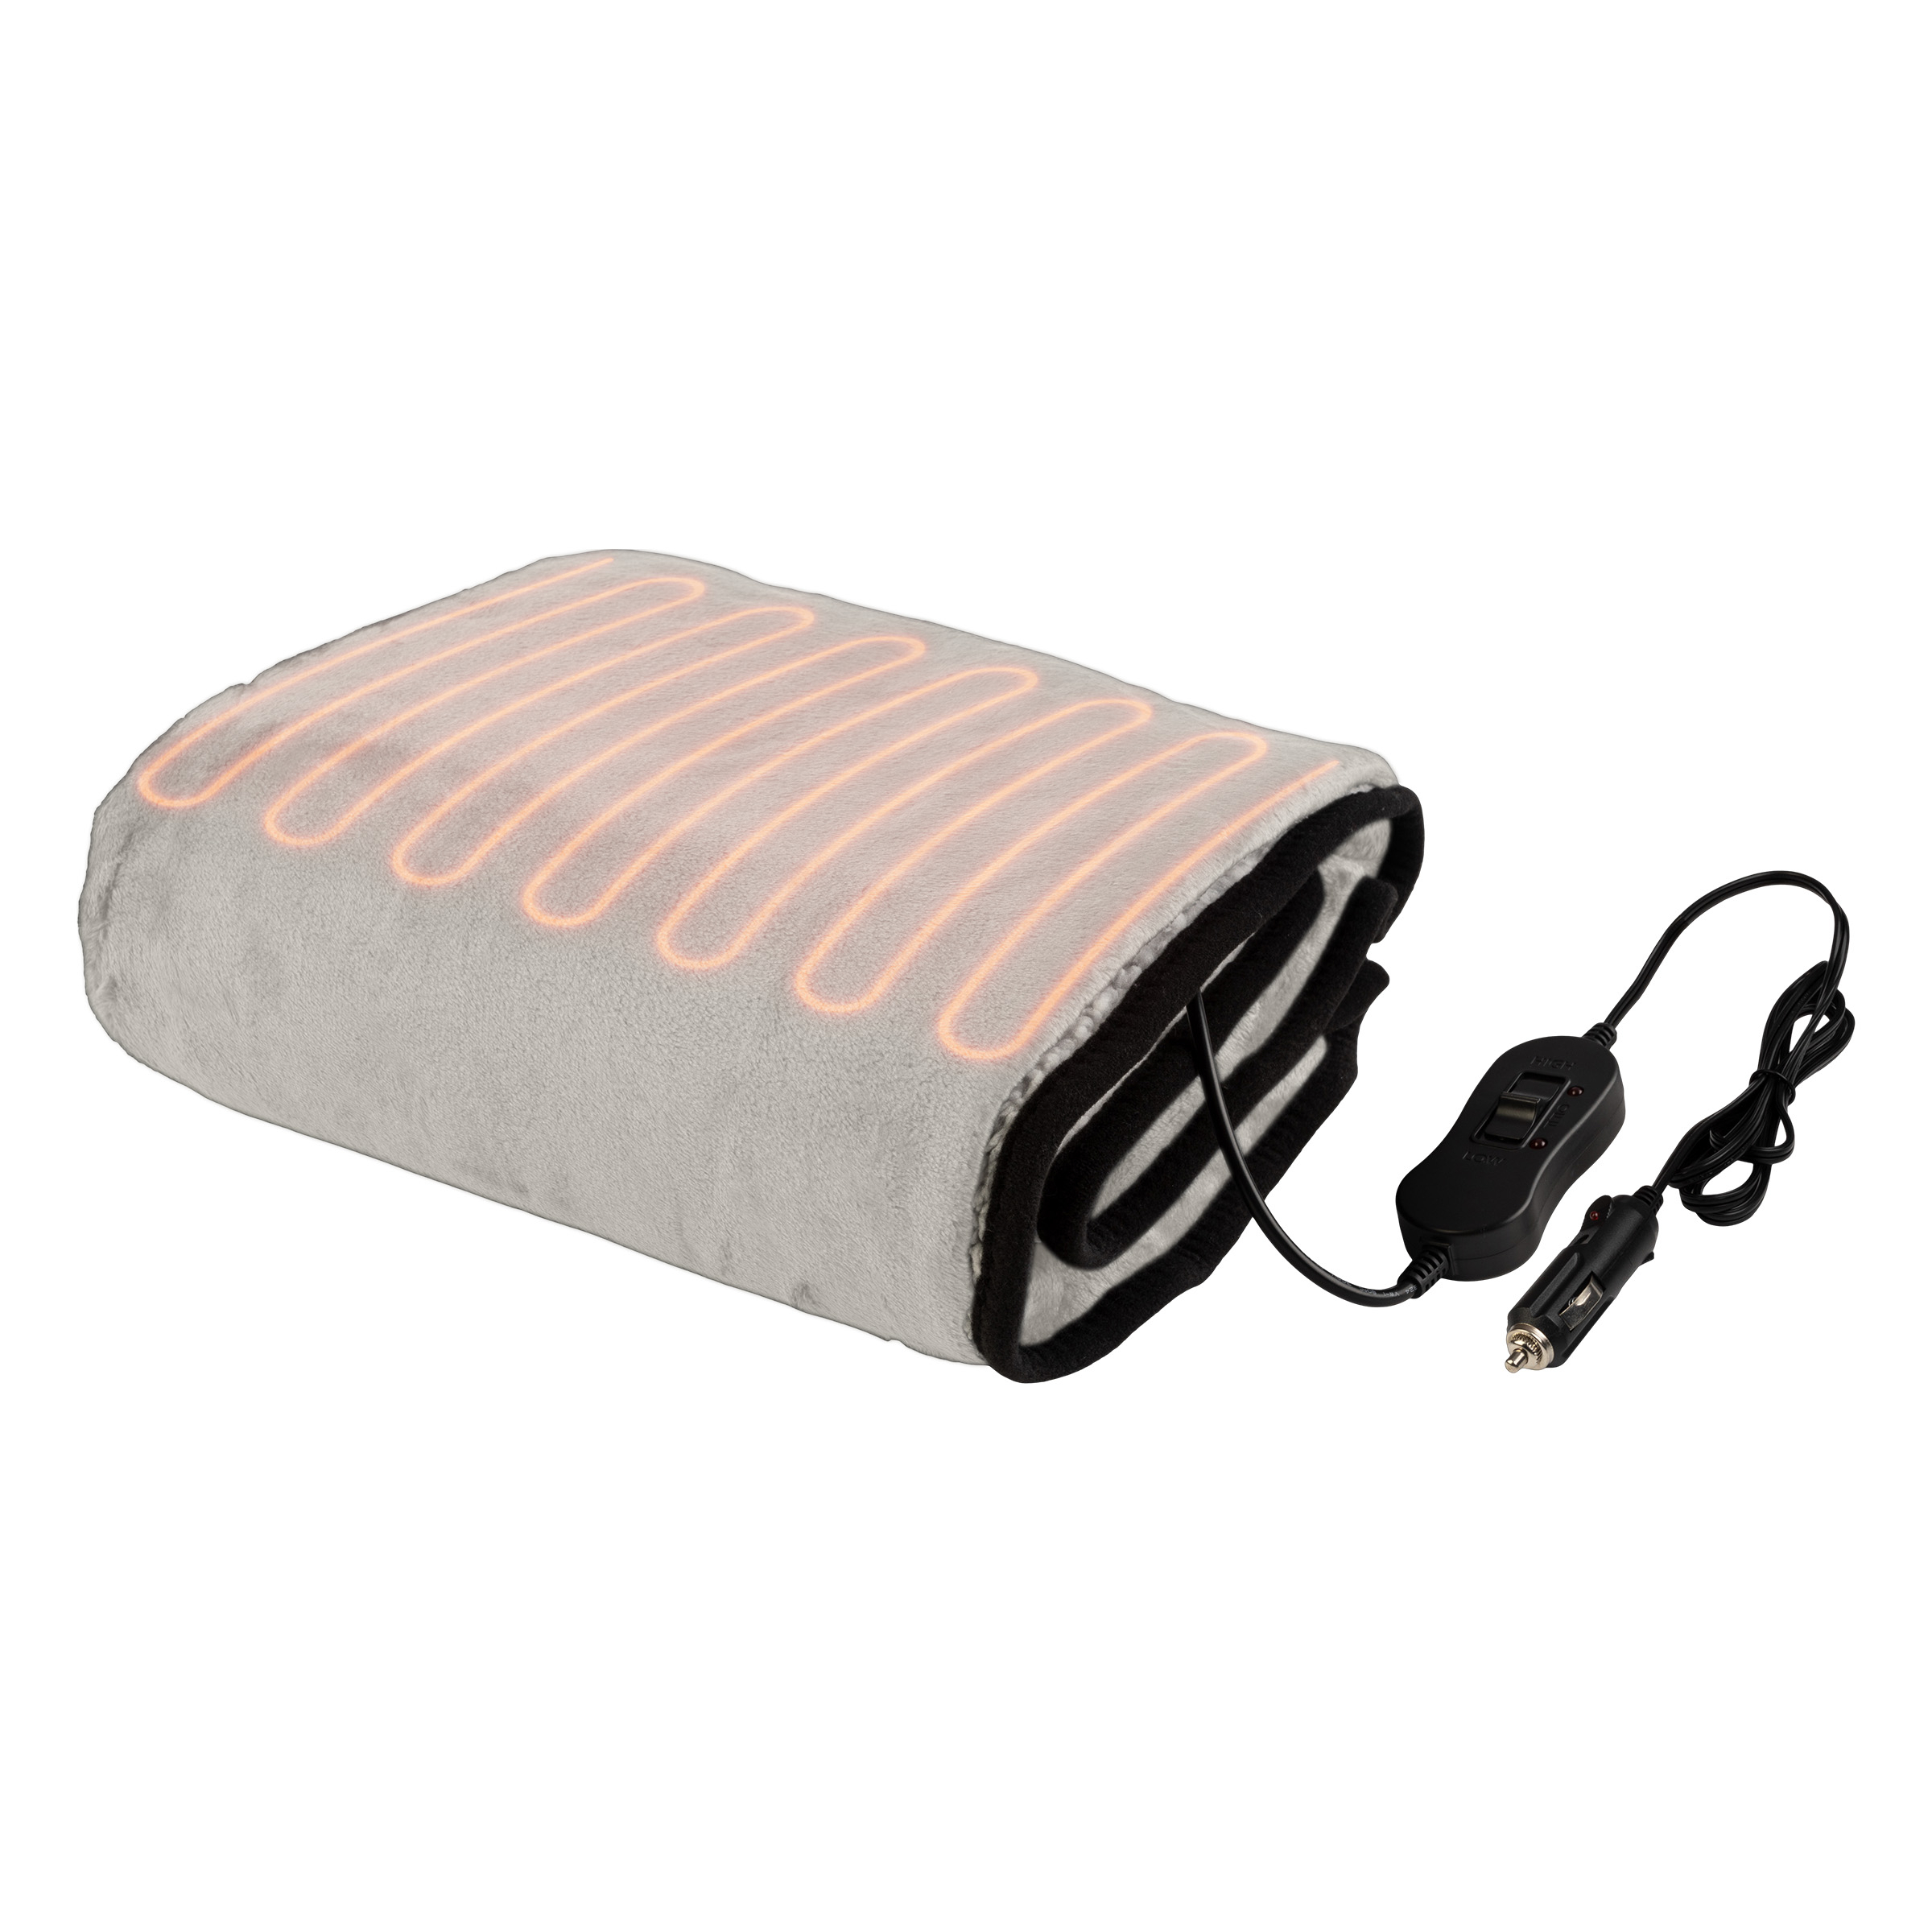 Heated Blanket Portable 12V Electric Travel Blanket For Car, Truck, Or RV - Light Gray